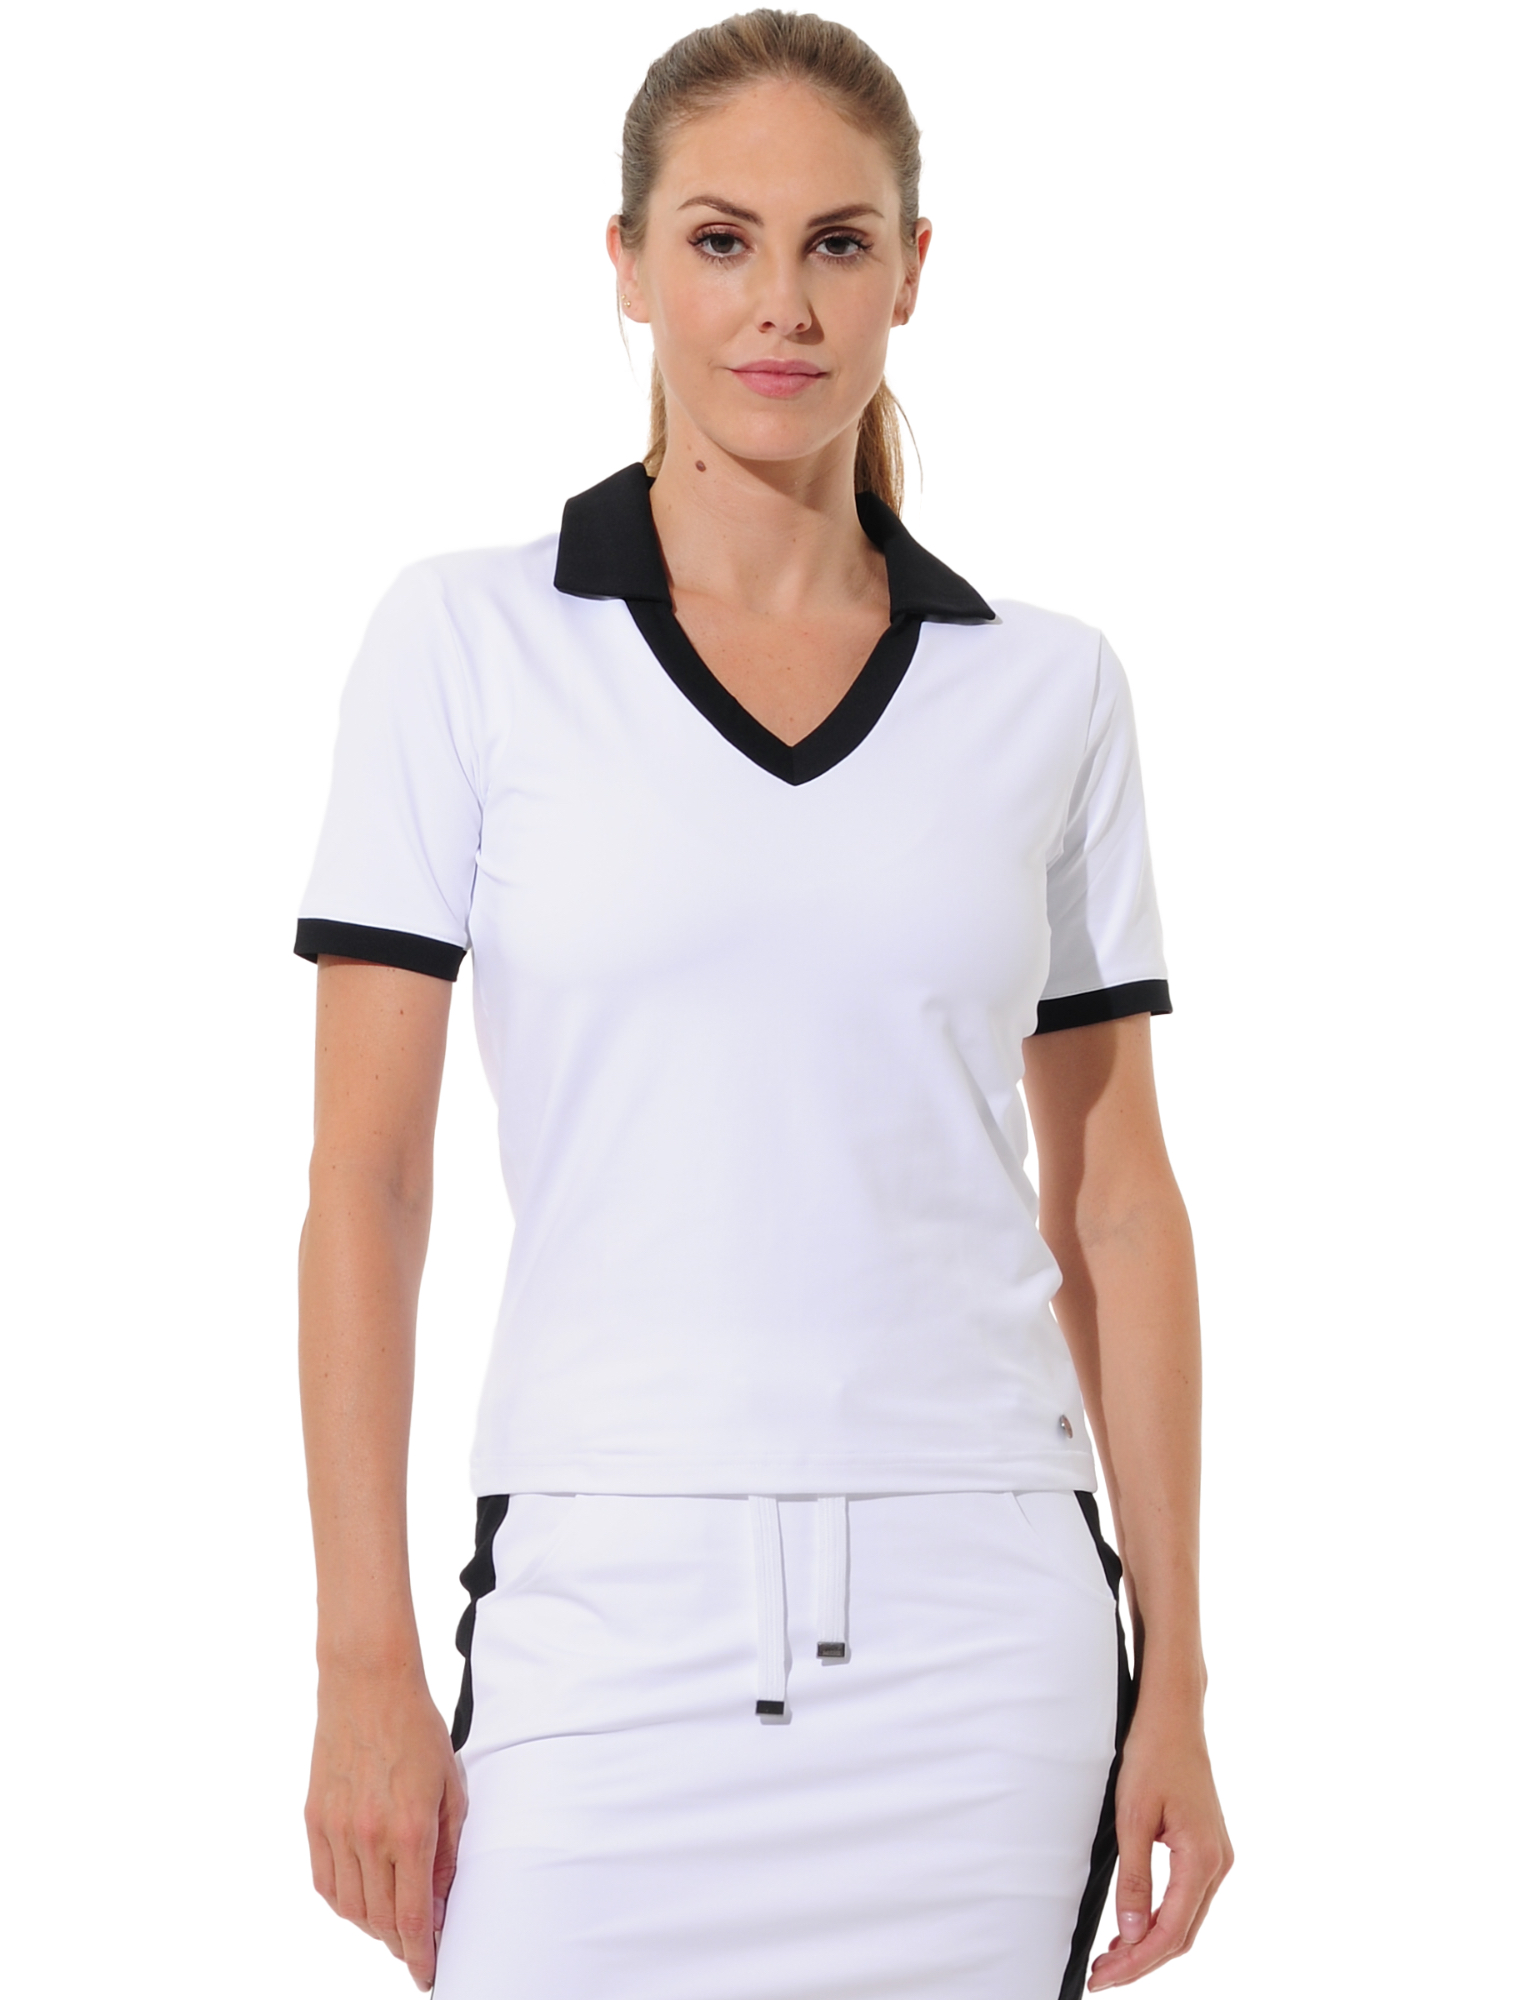 Jersey Golf Poloshirt white/black